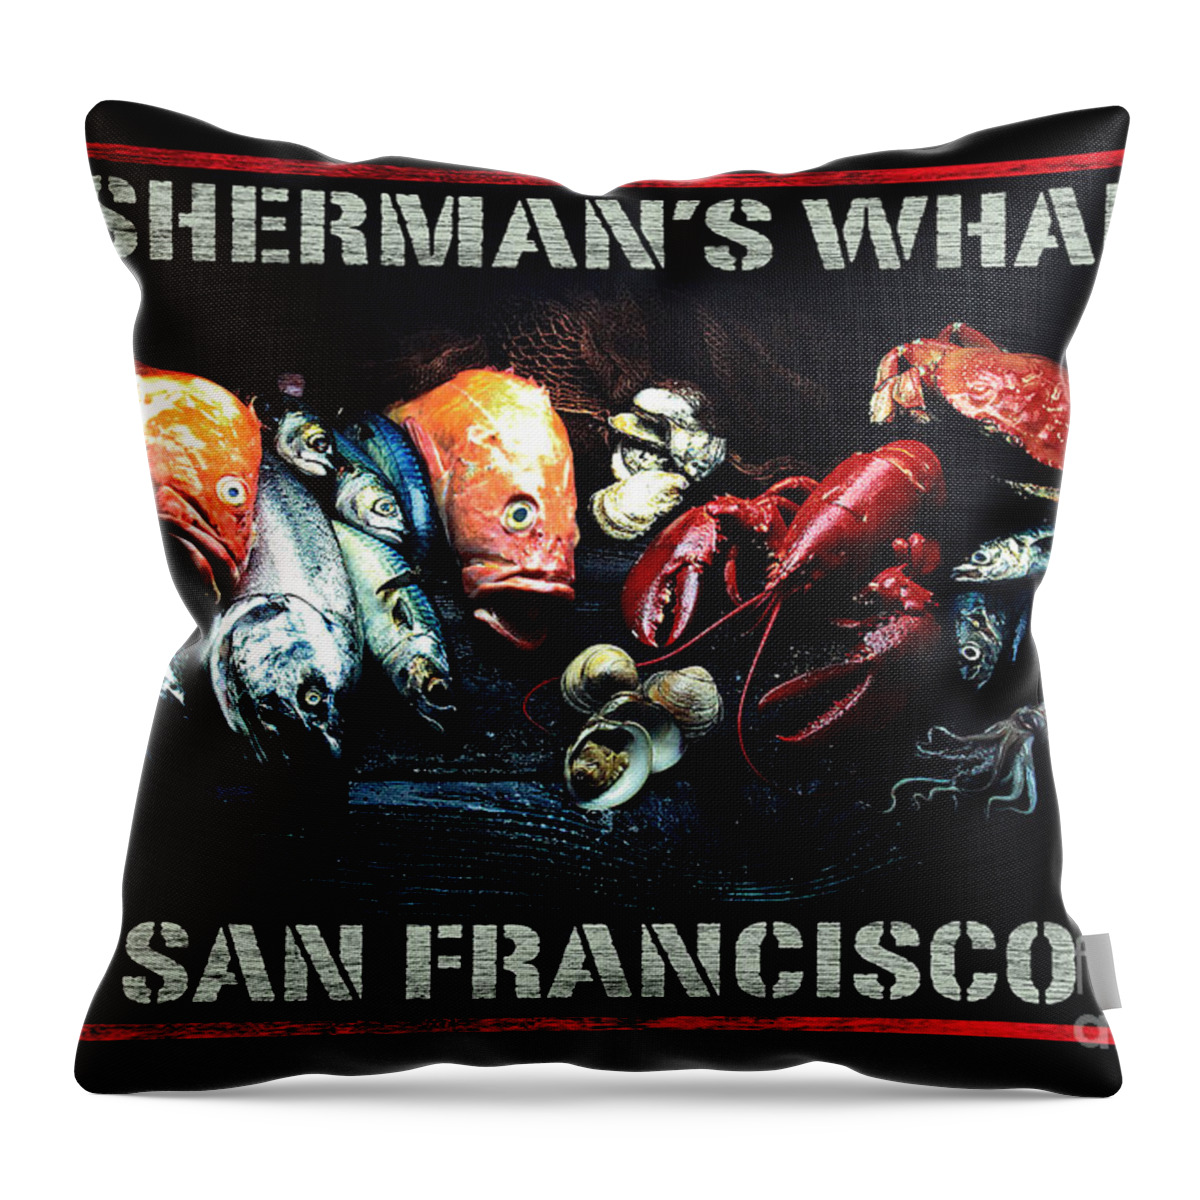 Fisherman's Wharf Throw Pillow featuring the digital art Fisherman's Wharf San Francisco by Brian Watt